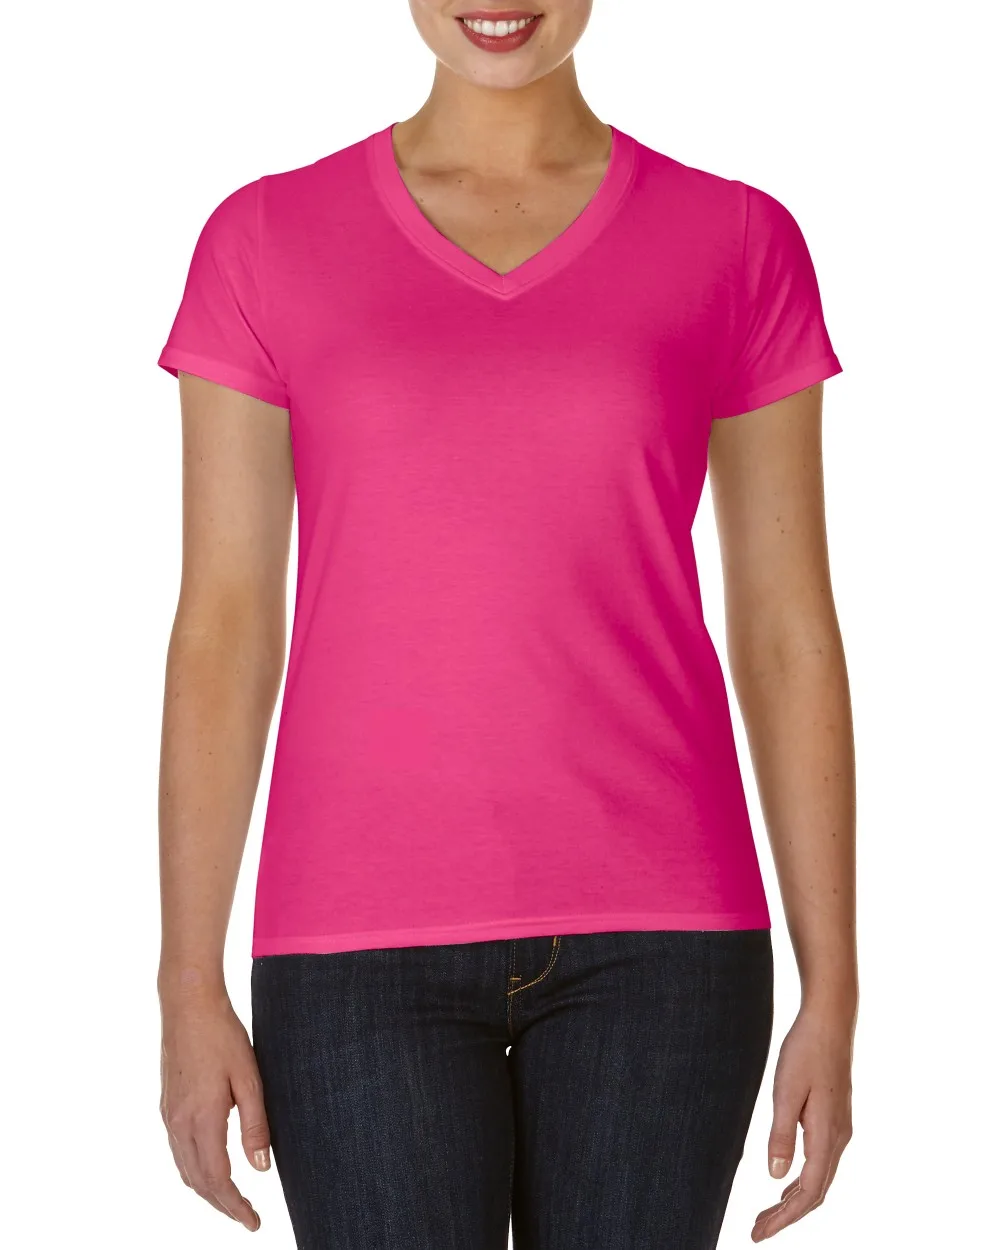 Fashion V-neck Cotton Blank Sublimation Plain Women's T-shirt For ...